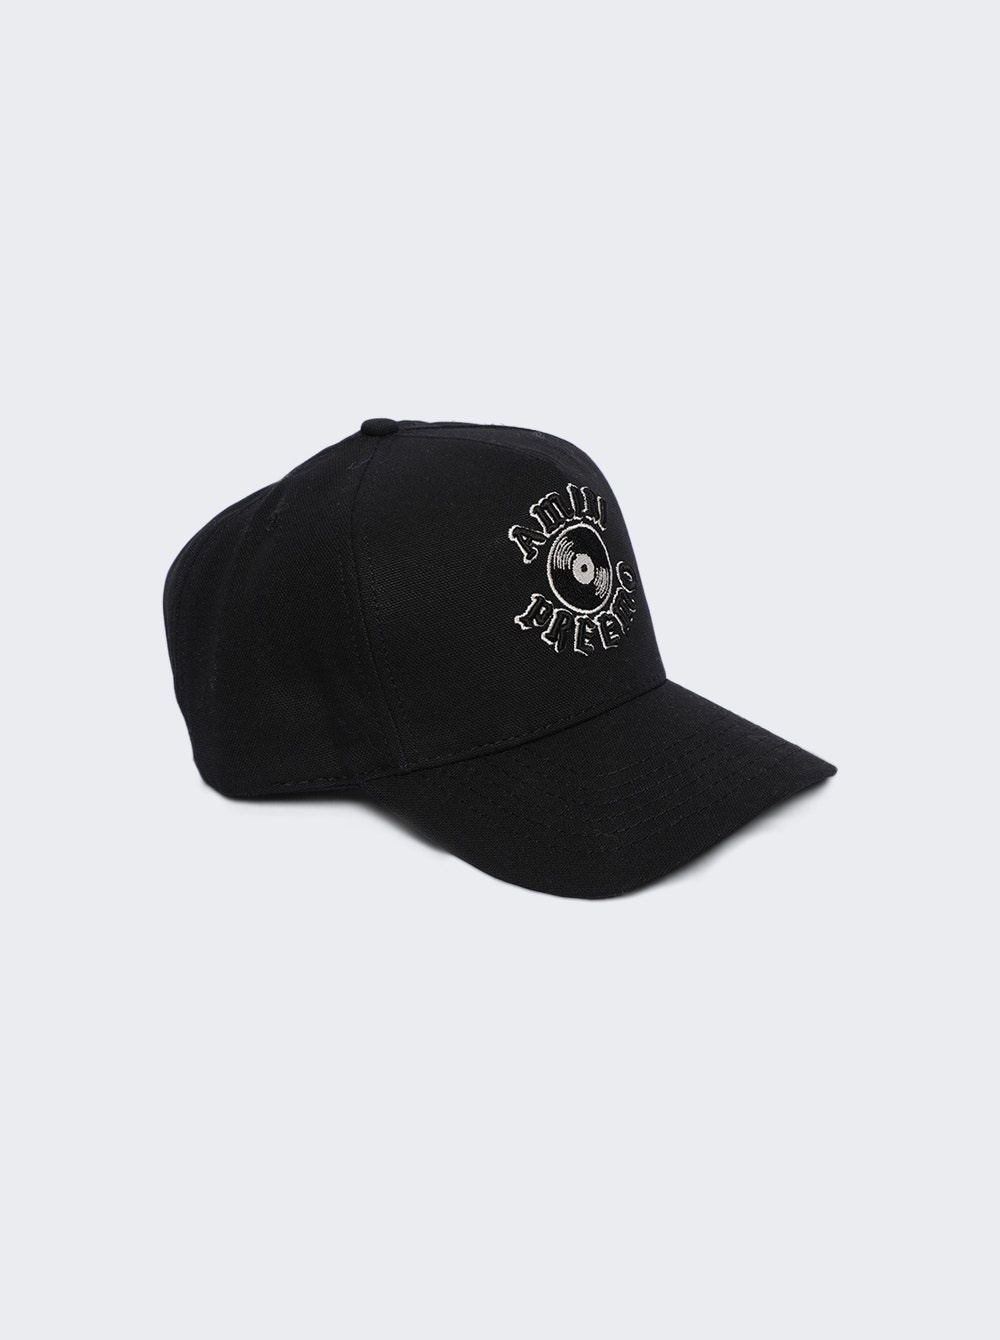 DJ Premier Record Canvas Hat Black - 5